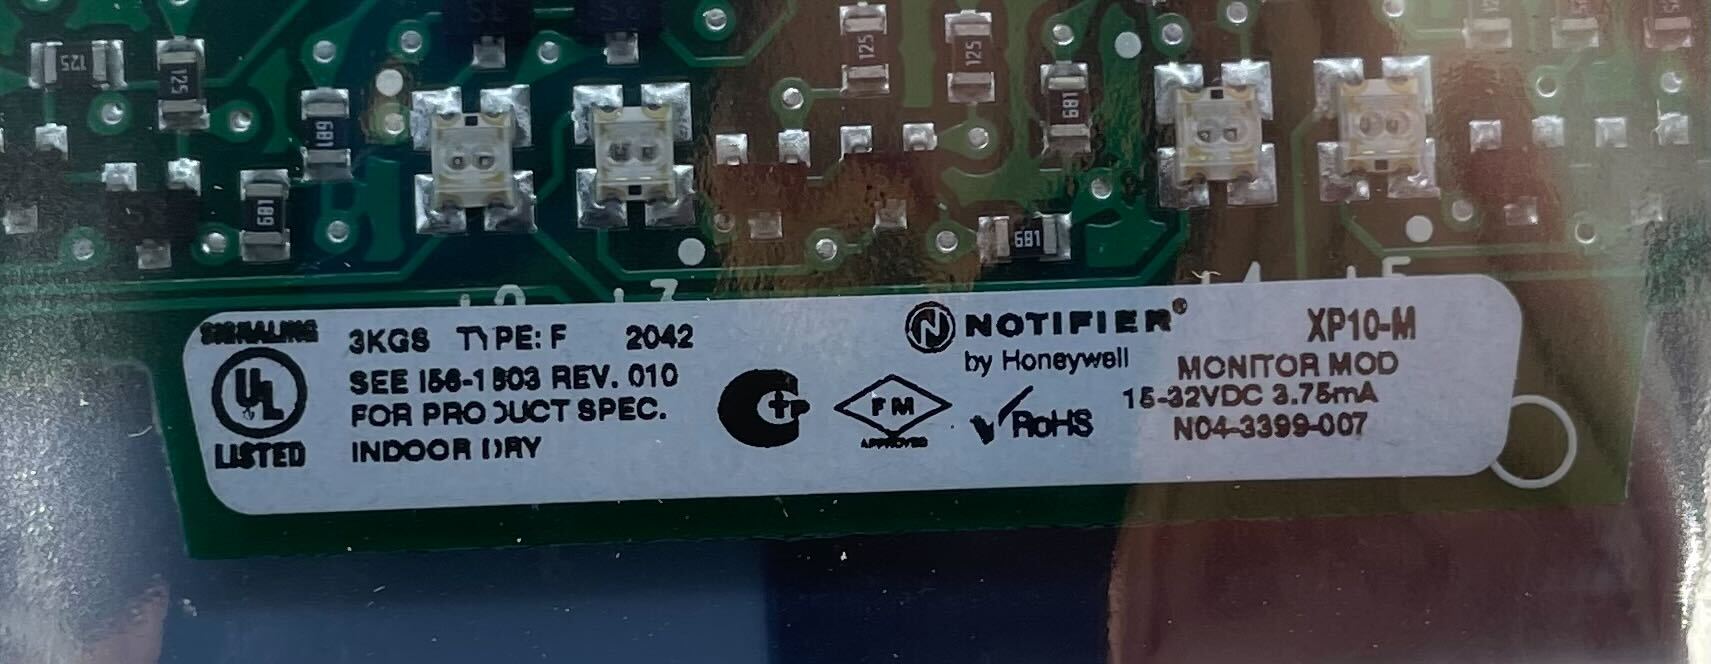 Notifier XP10-M - The Fire Alarm Supplier